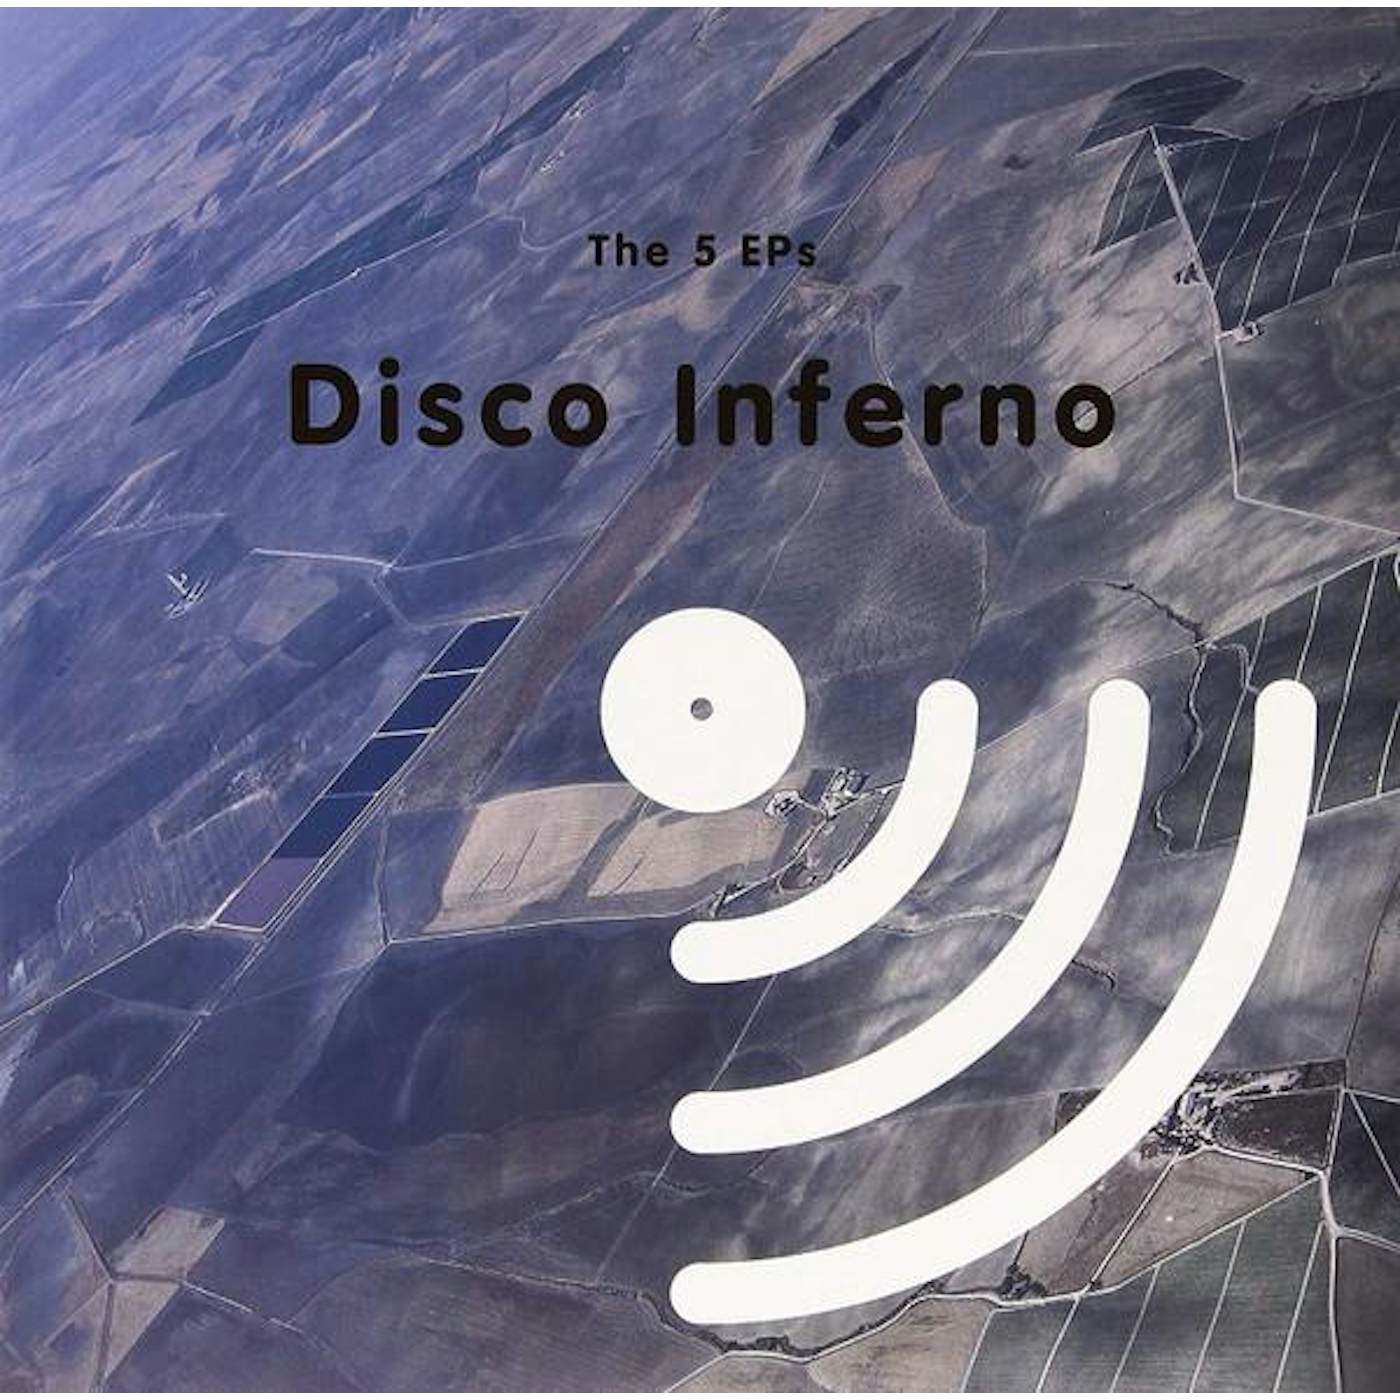 Disco Inferno 5 EPS Vinyl Record